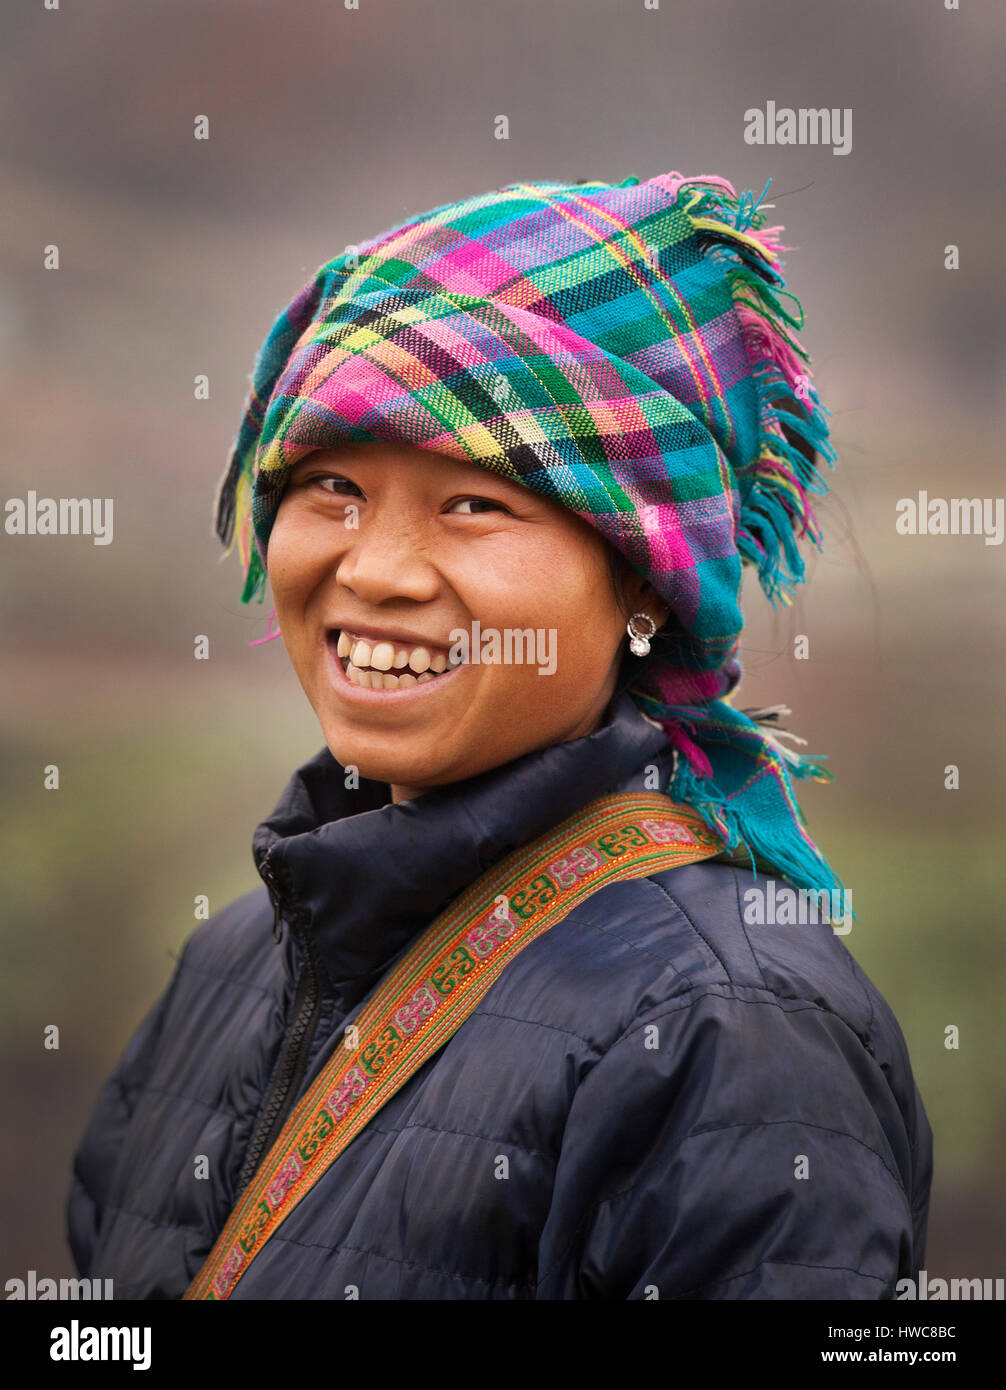 Los residentes de tribus hmong, SAPA, Vietnam Foto de stock